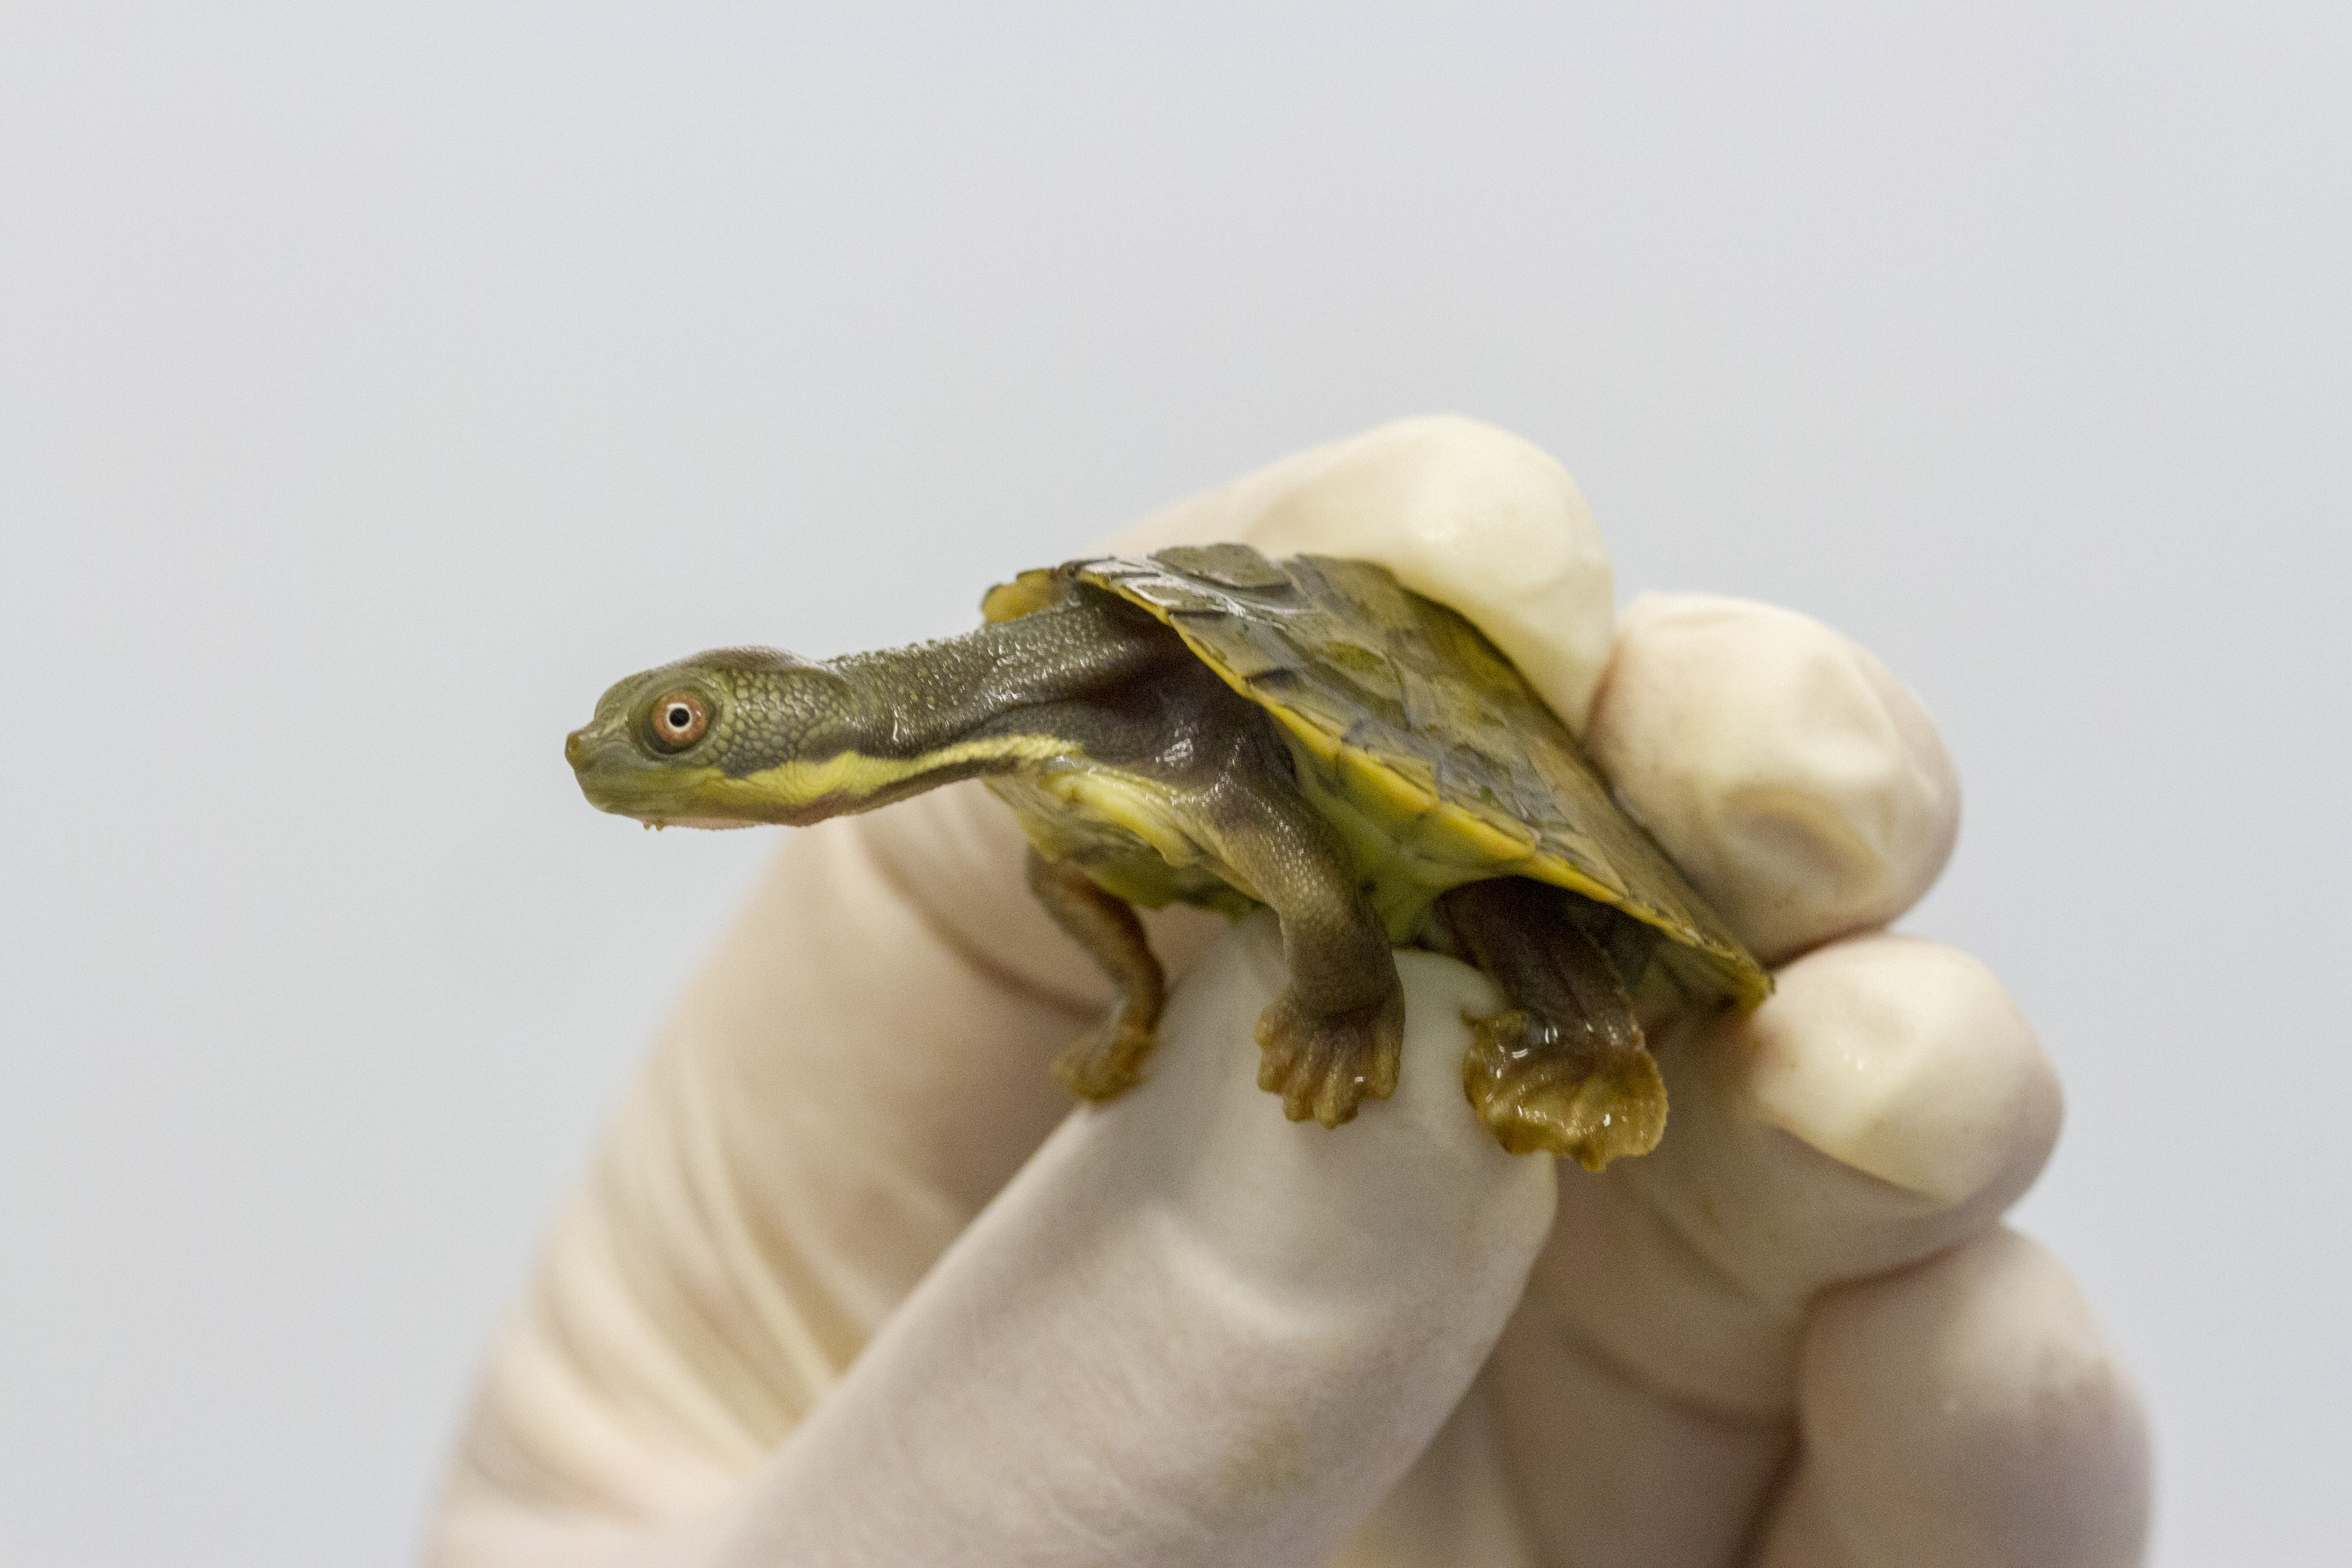 NSW DPI helps save endangered turtles